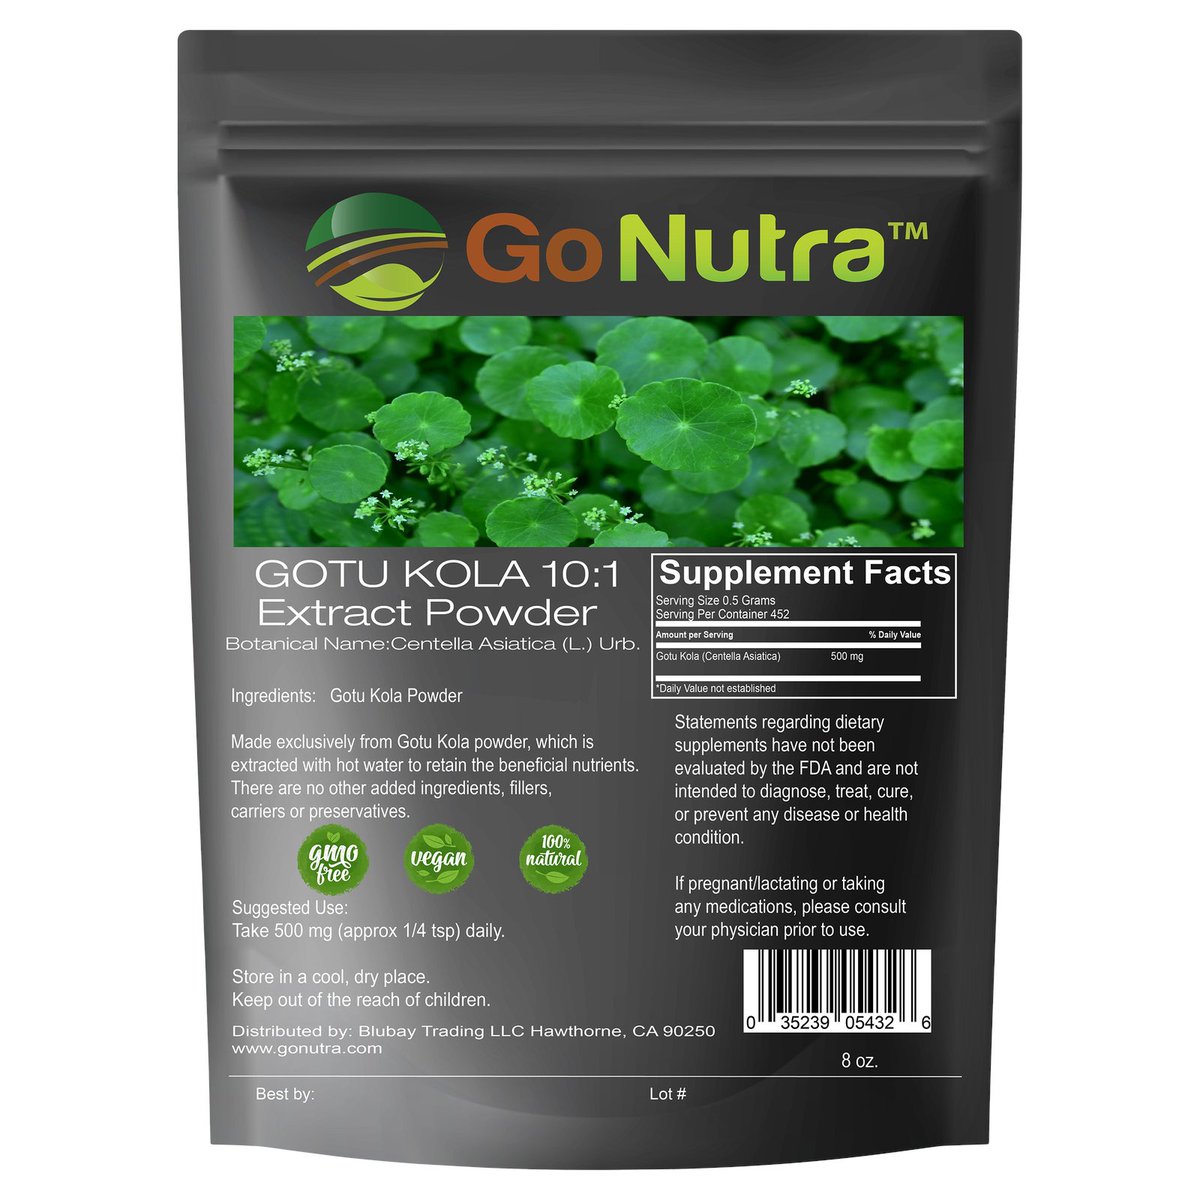 gonutrastore: Gotu kola has been used to treat syphilis, hepatitis, stomach...